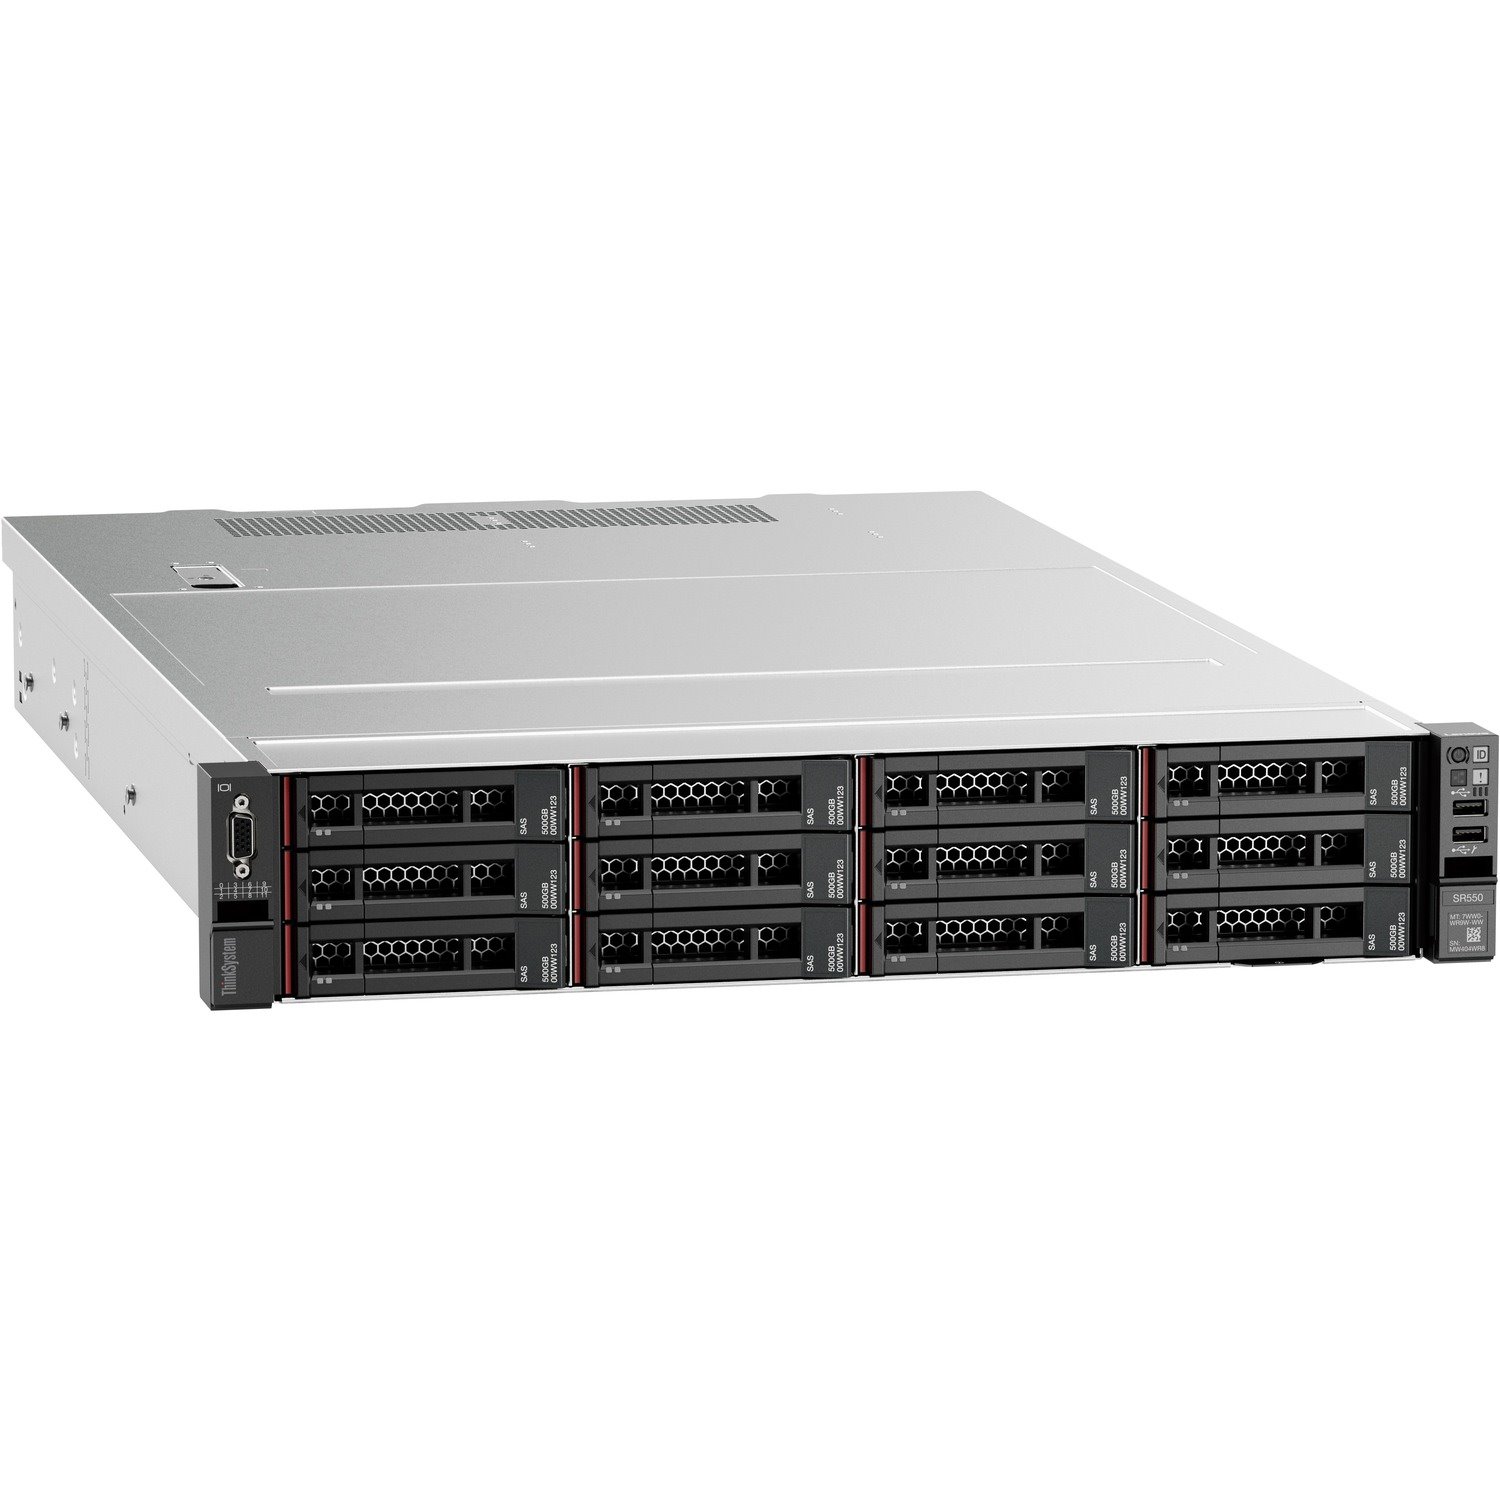 Lenovo ThinkSystem SR550 7X04A07LAU 2U Rack Server - 1 x Intel Xeon Silver 4208 2.10 GHz - 16 GB RAM - Serial ATA/600, 12Gb/s SAS Controller